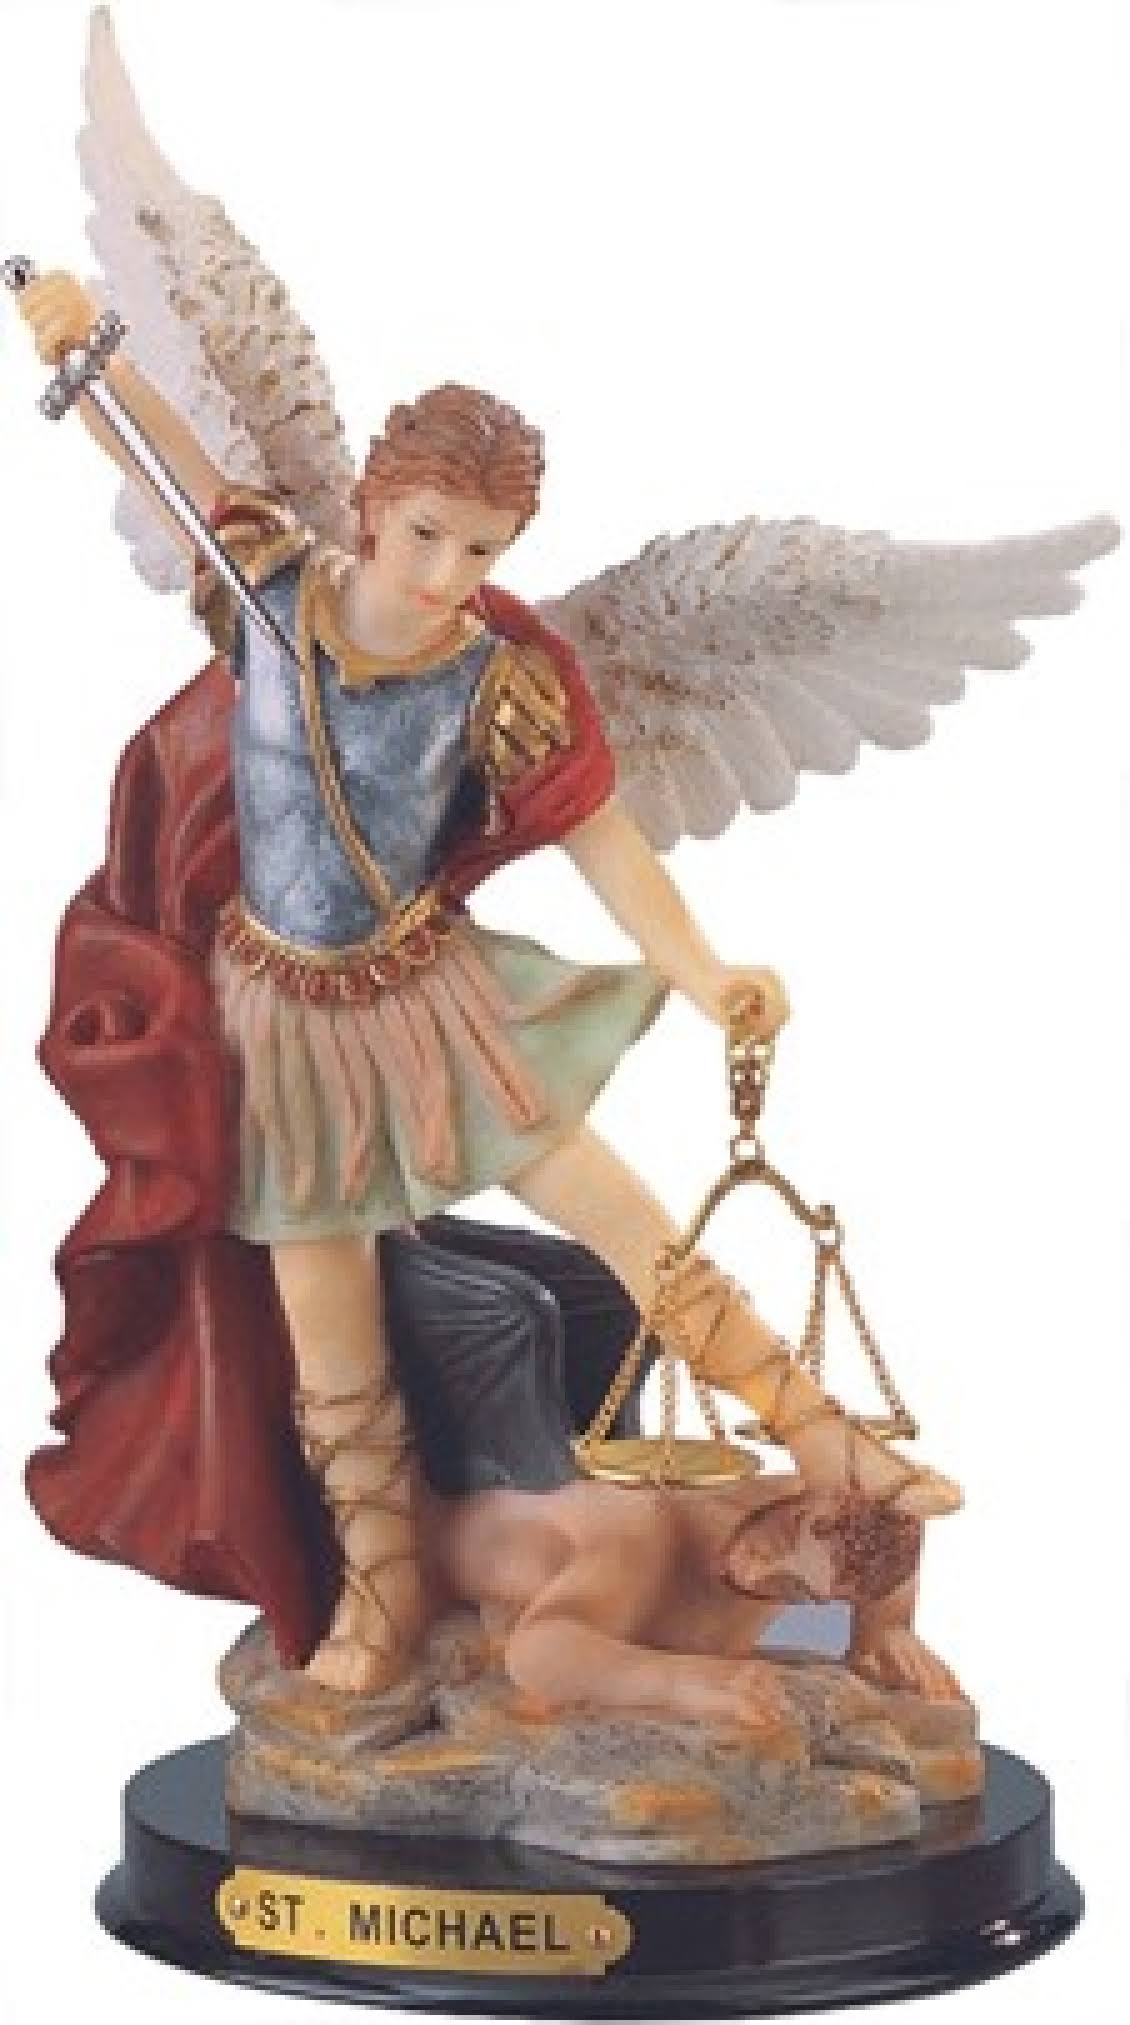 9 inch Saint Michael The Archangel Holy Figurine Religious Decoration